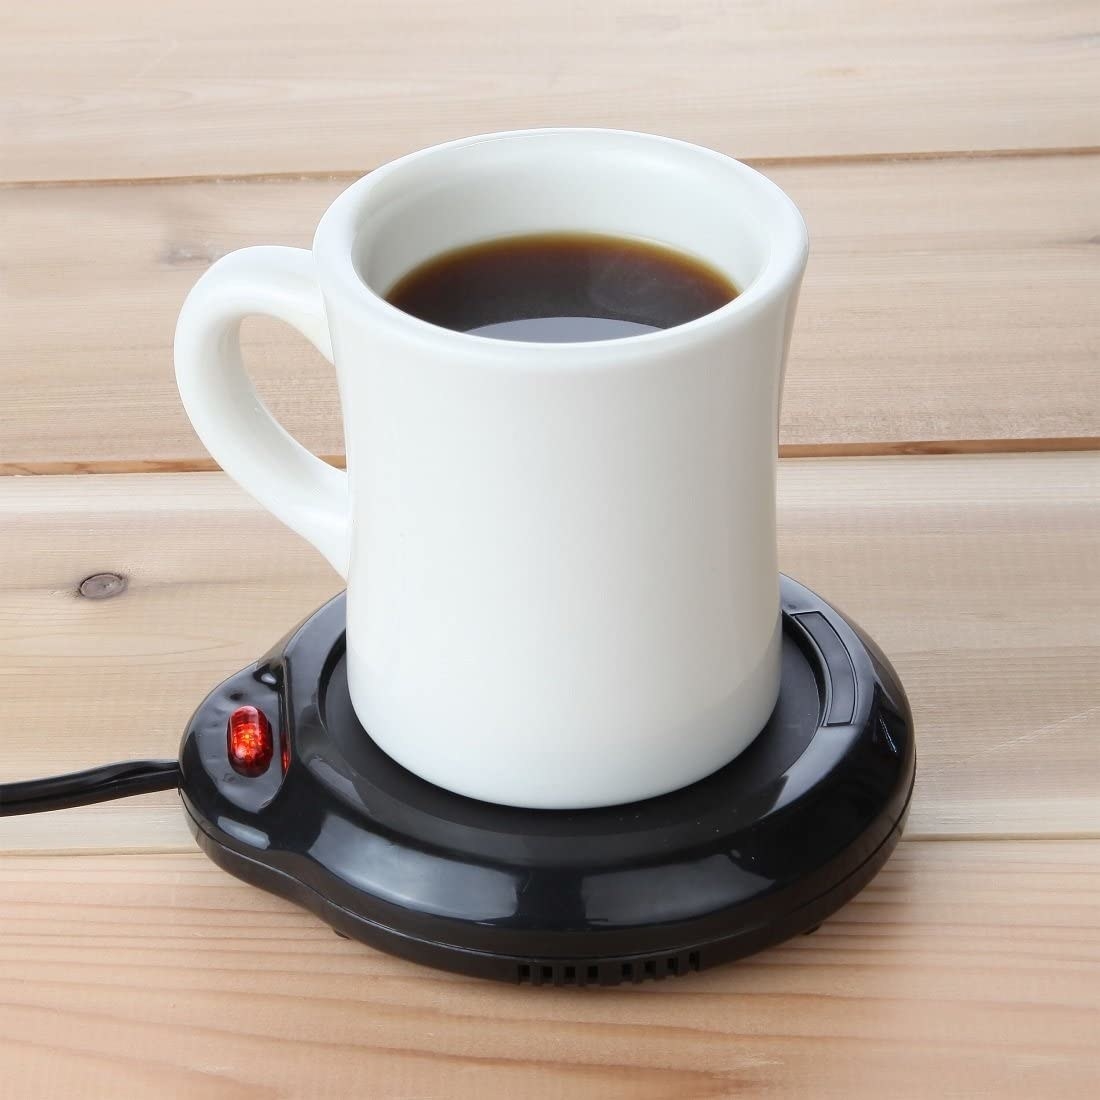 coffee mug on hot plate-like mug warmer